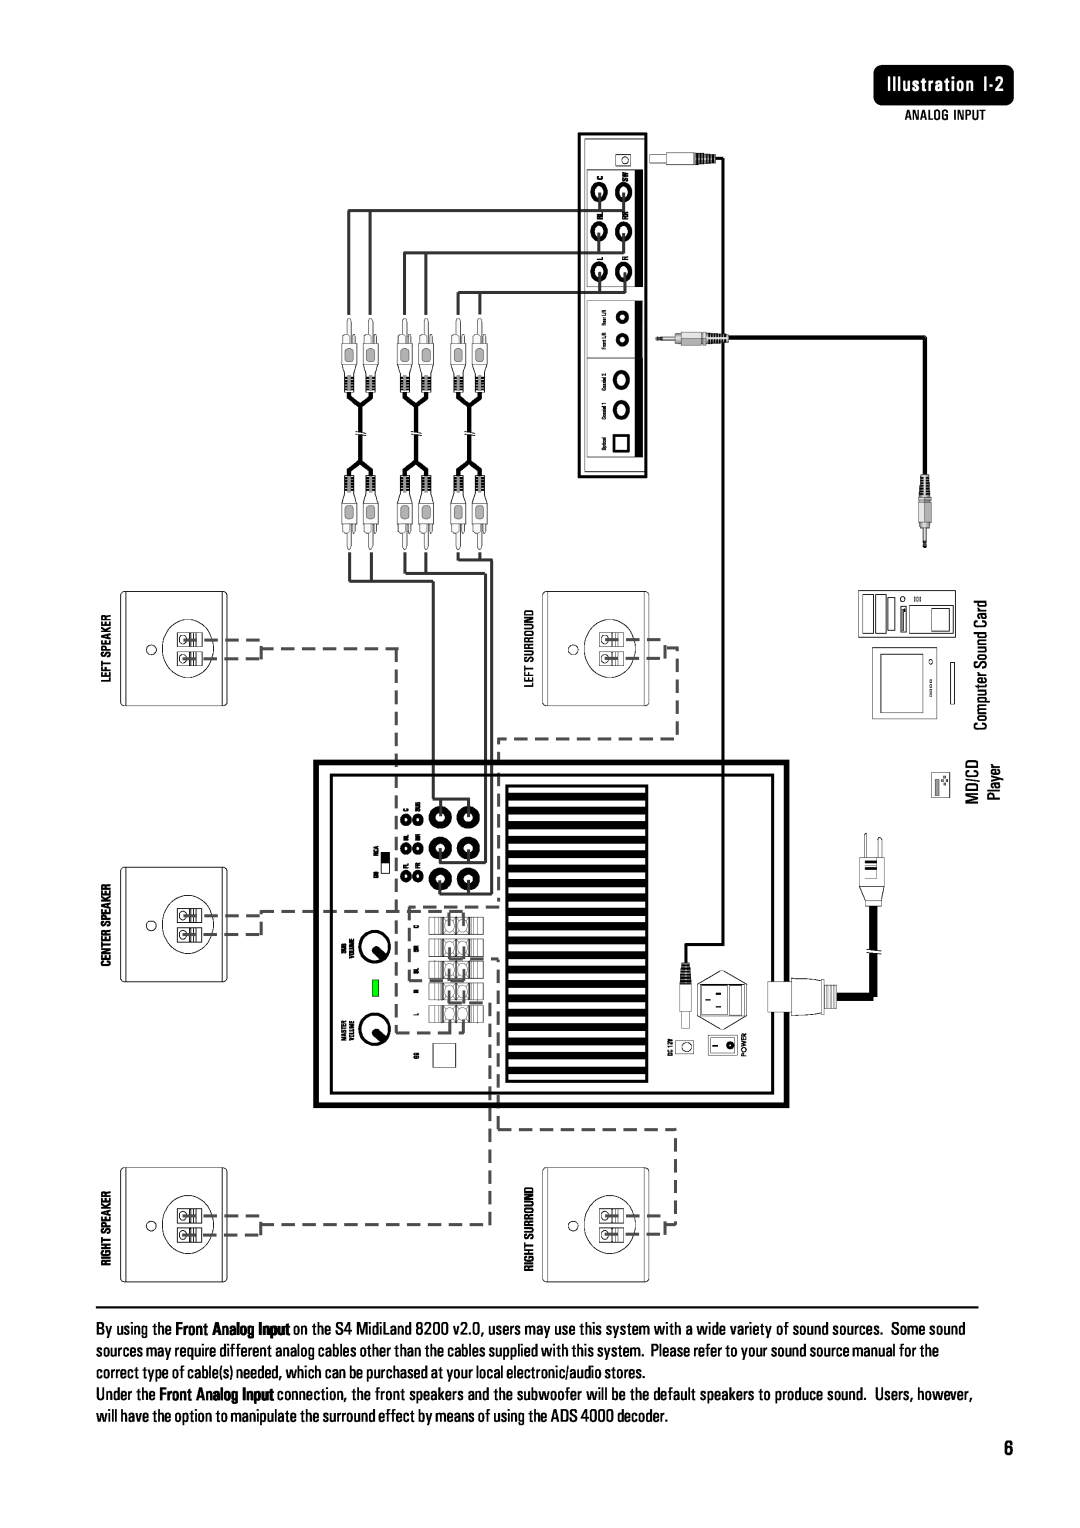 MidiLand 8200 owner manual Illustration, Player 